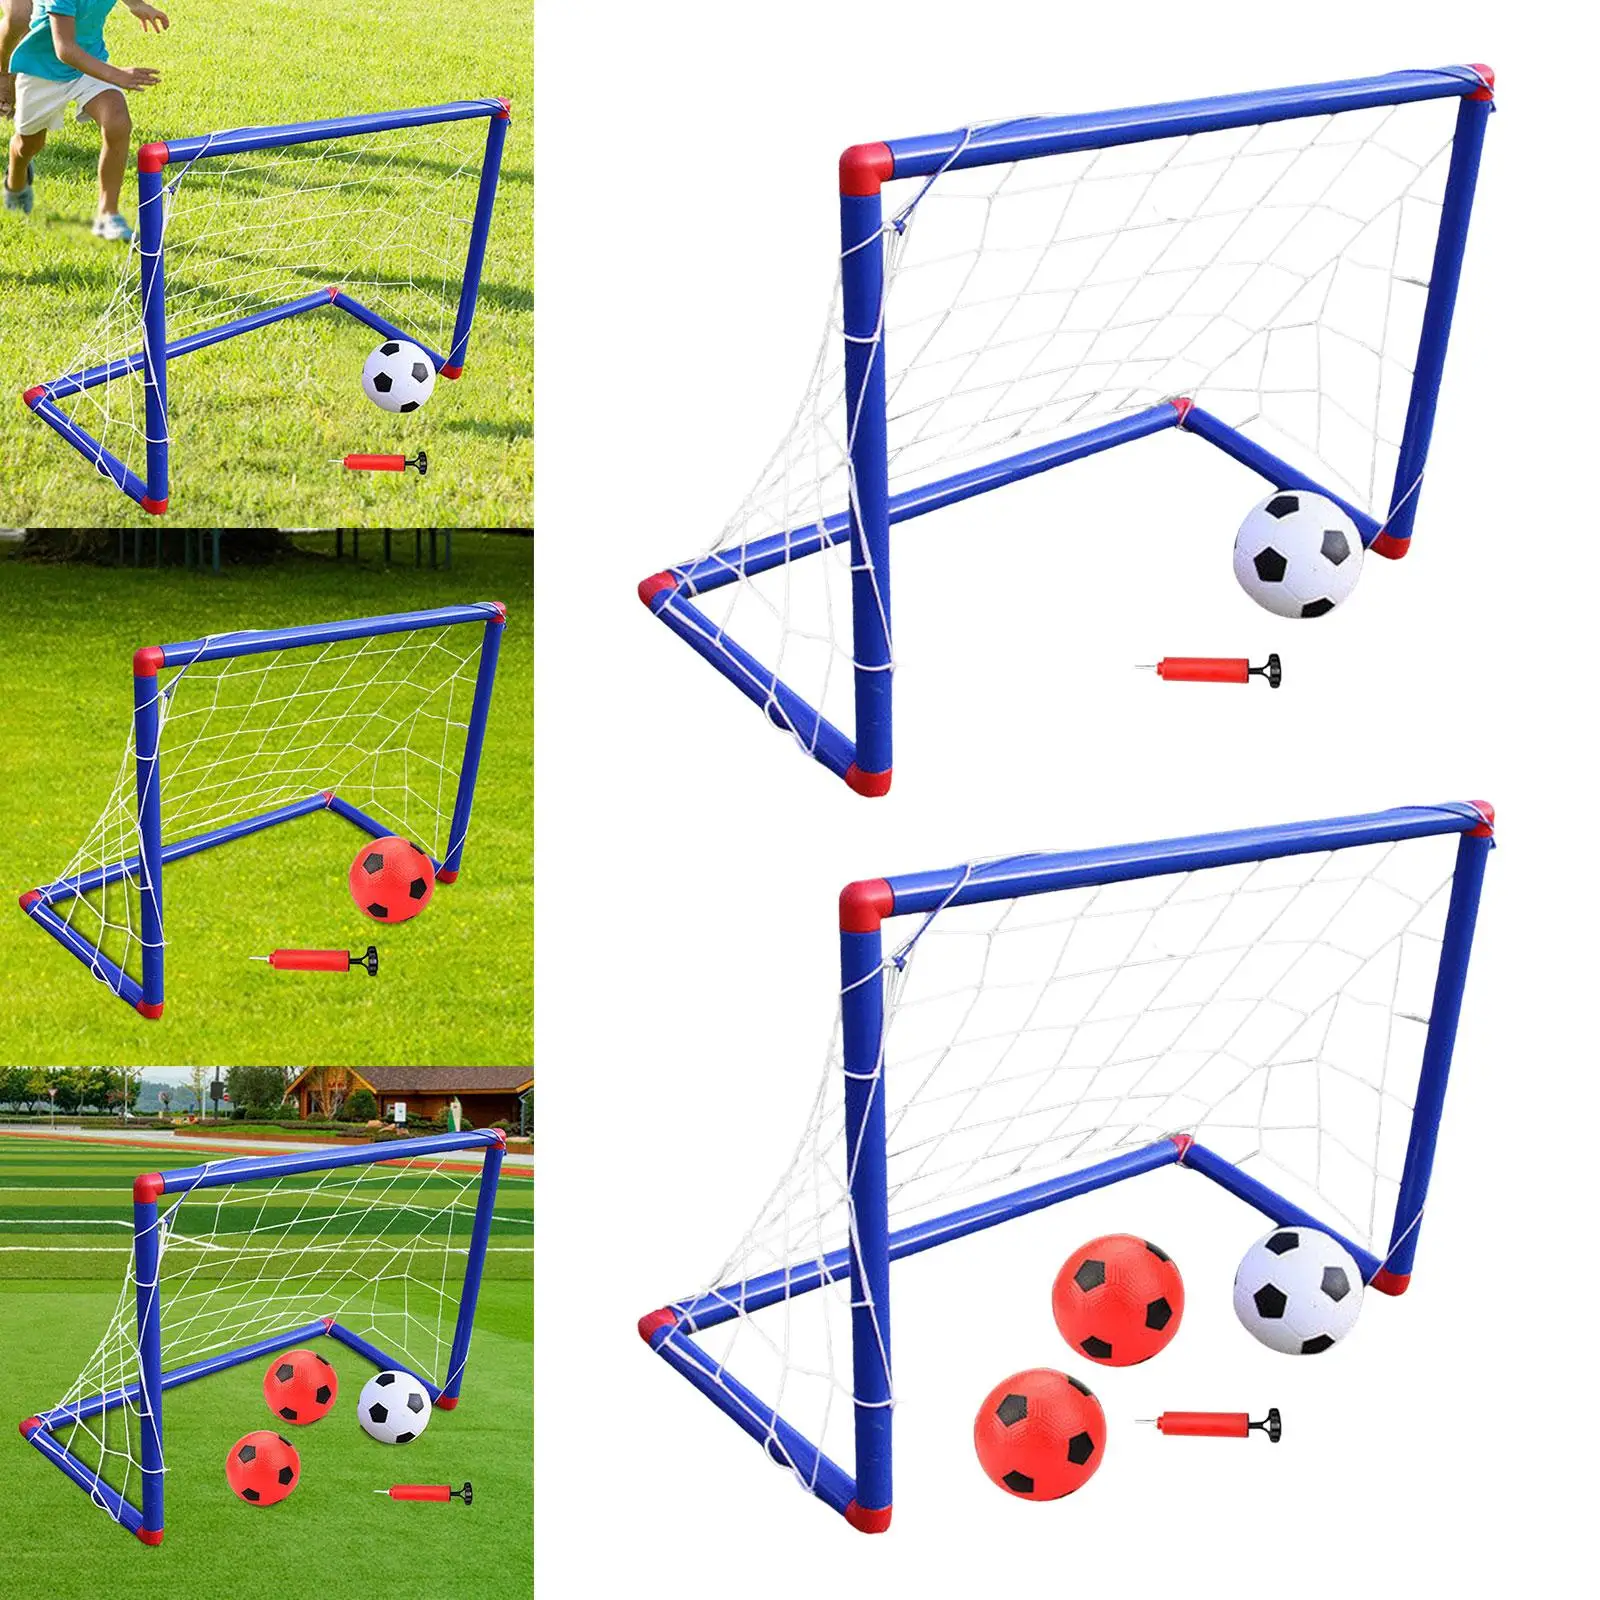 Kids Soccer Goal Soccer Nets Small Play Children Football Net